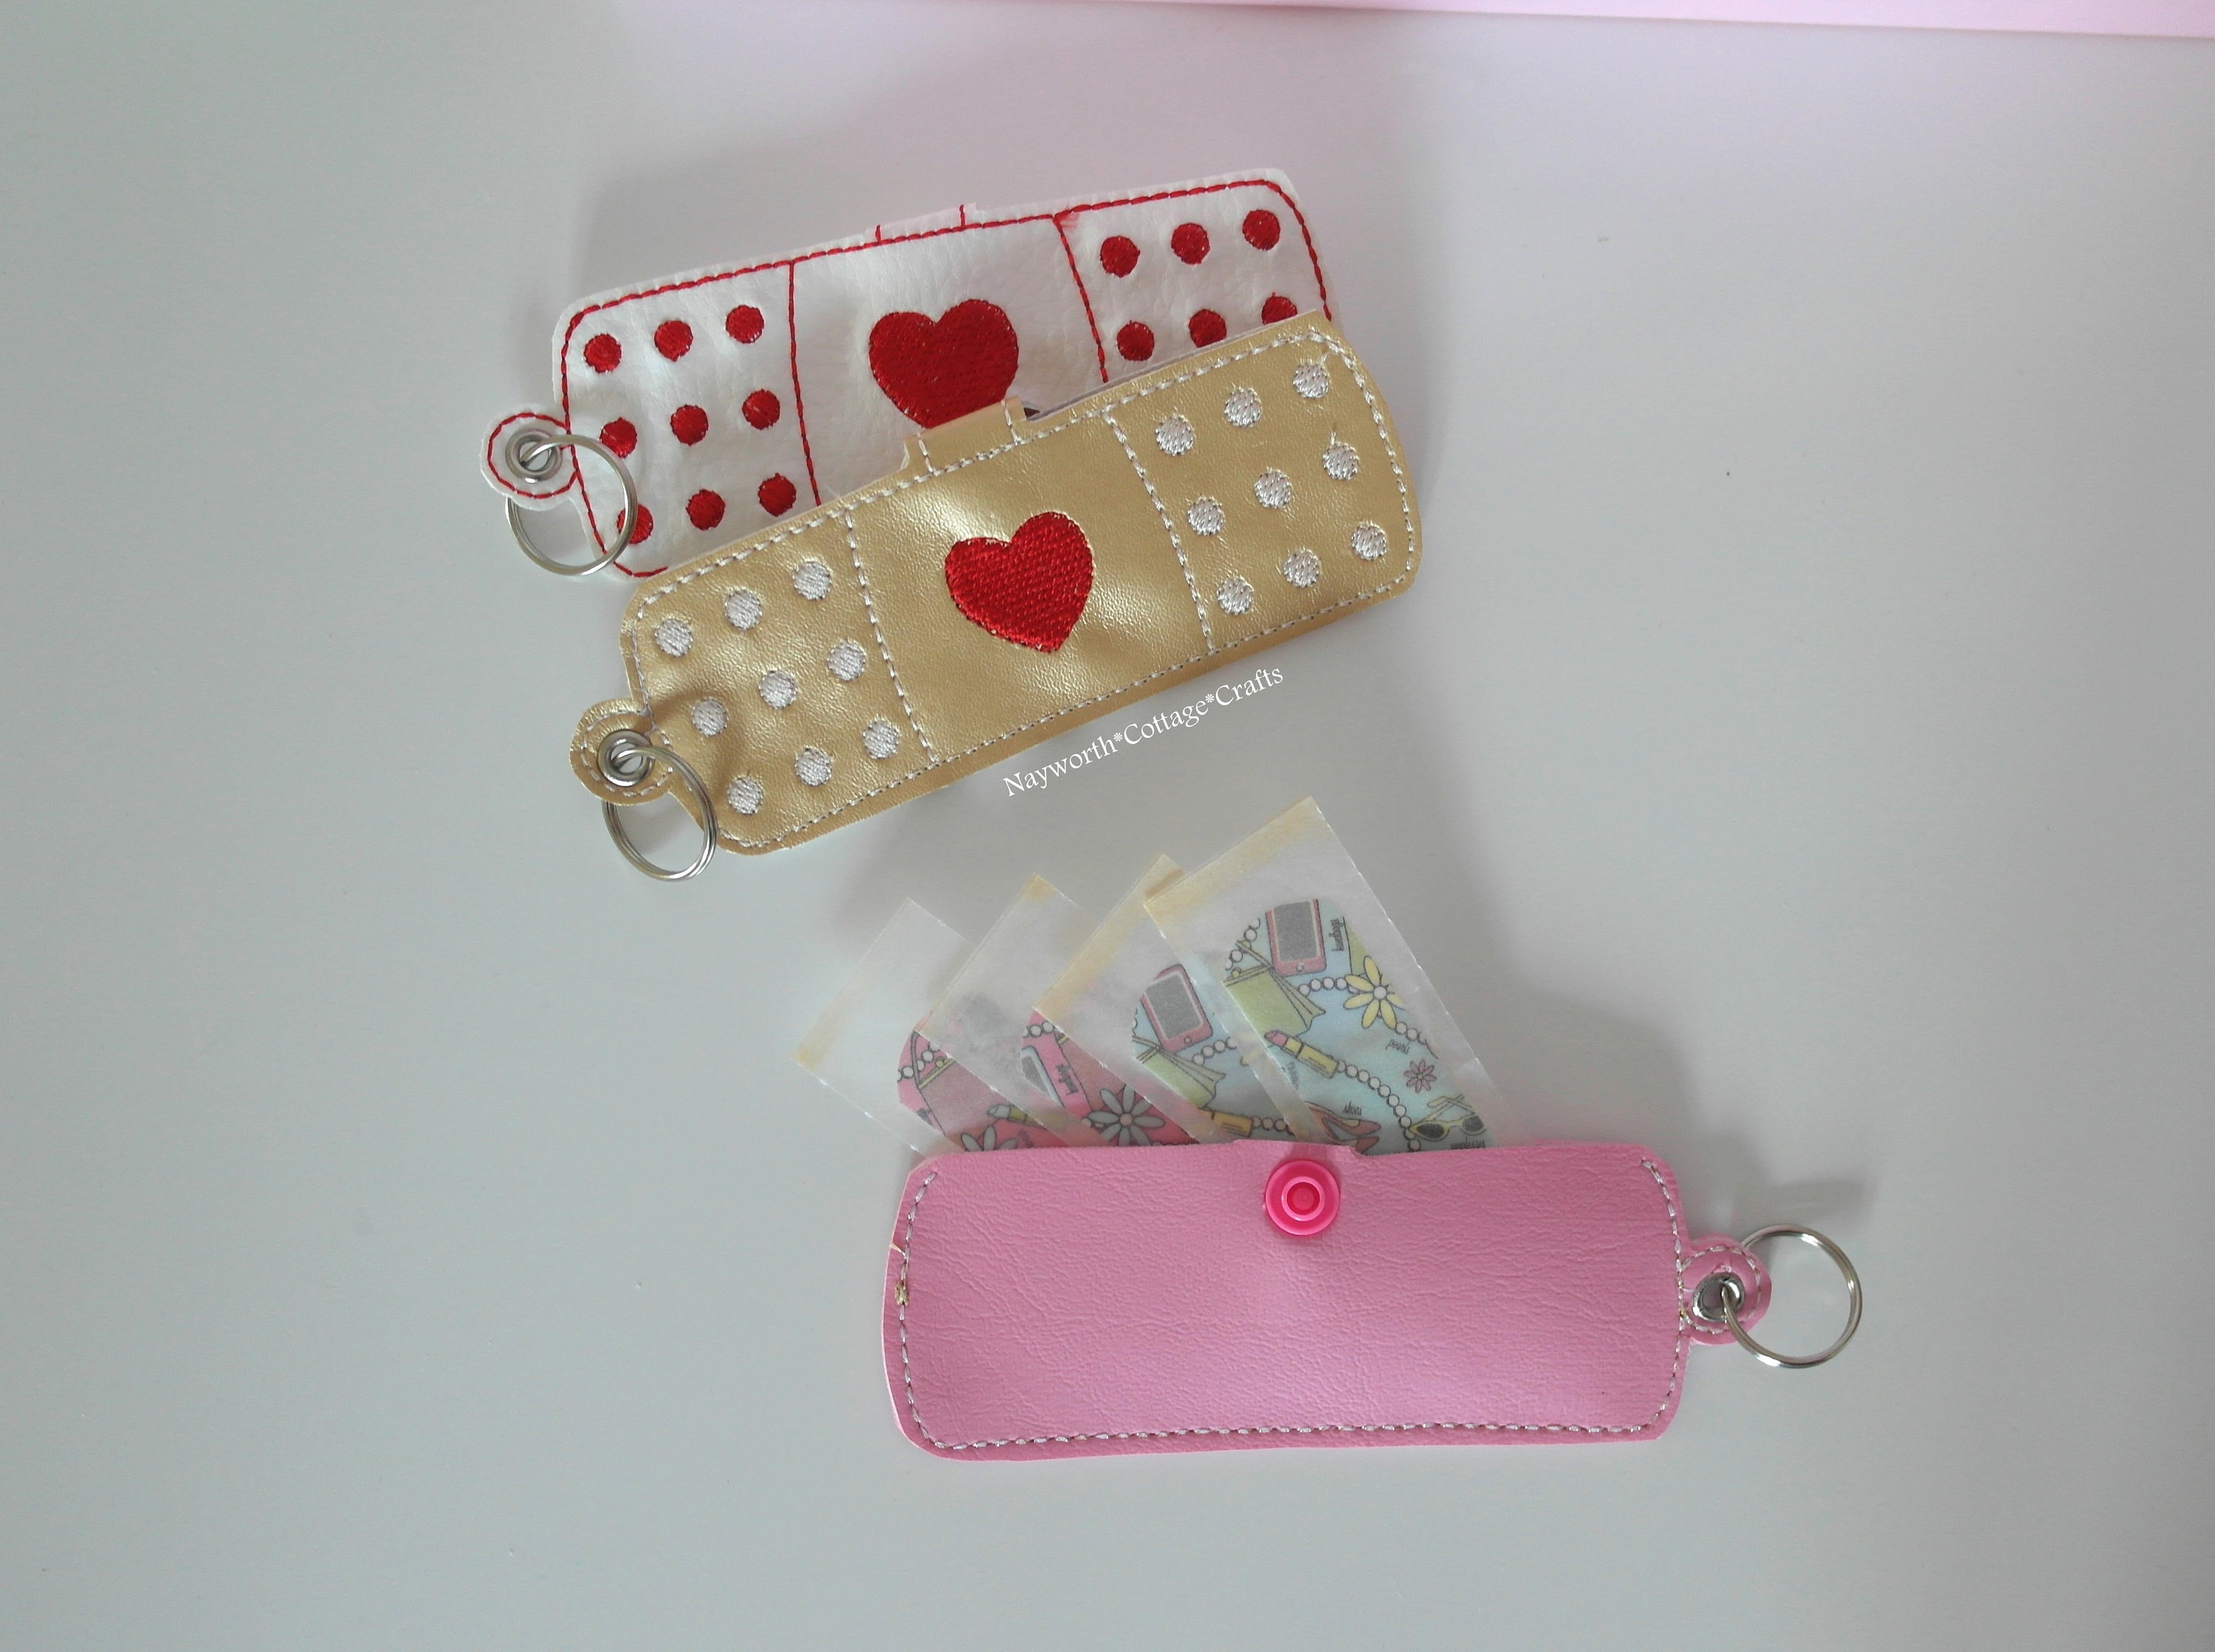 Plaster Band Aid Case Holder / Medical / Key Ring Fob / Embroidery / Bag  Charm / Bandage 